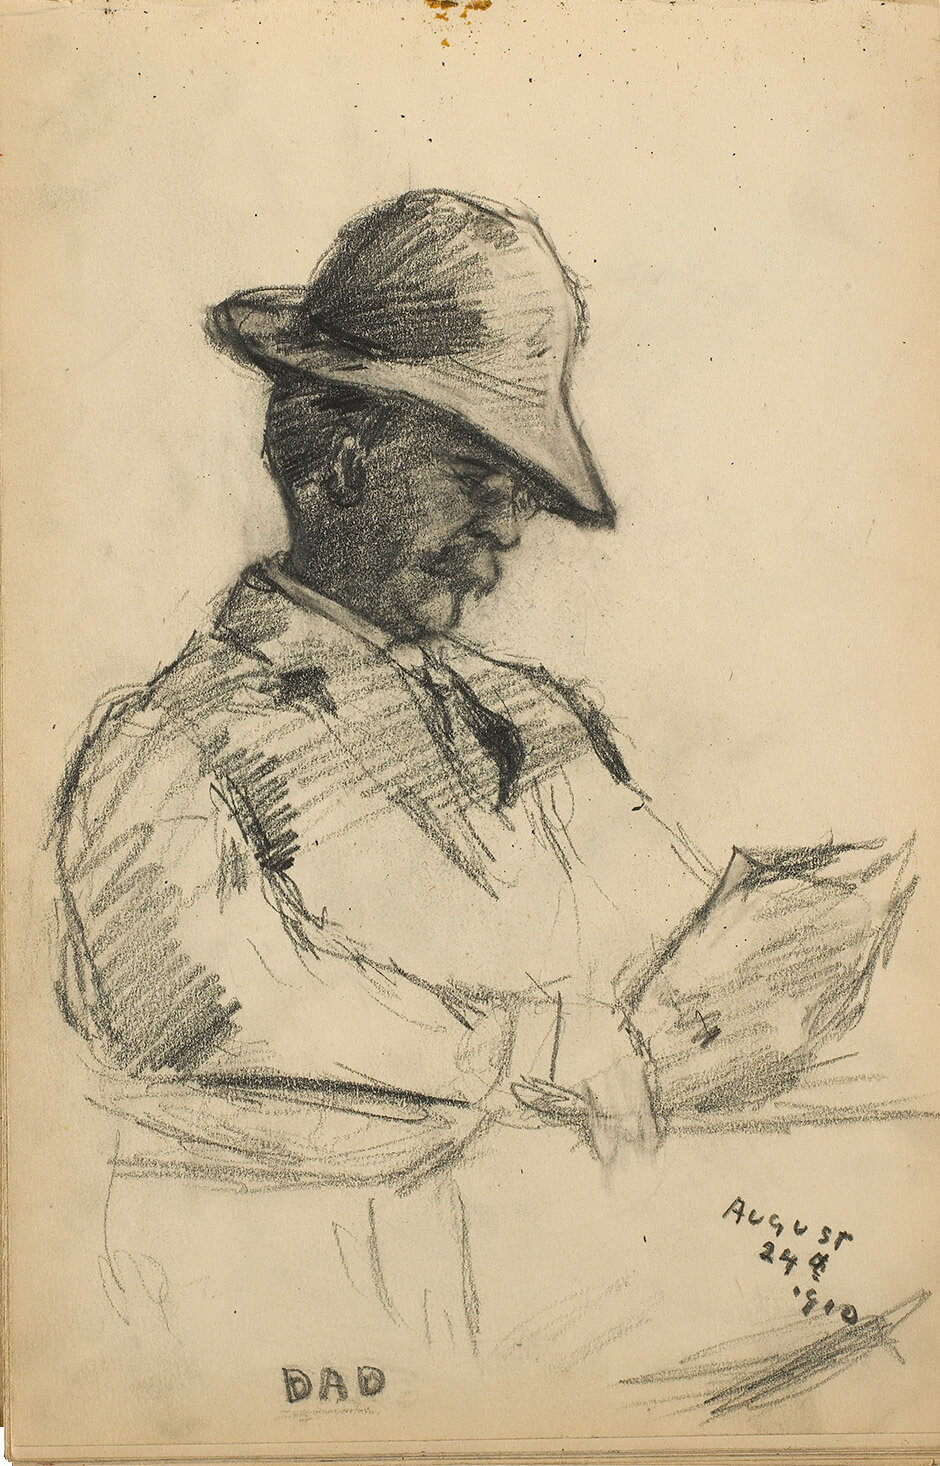 Art Canada Institute, Prudence Heward, Dad (August 24th, 1910), Sketchbook 1